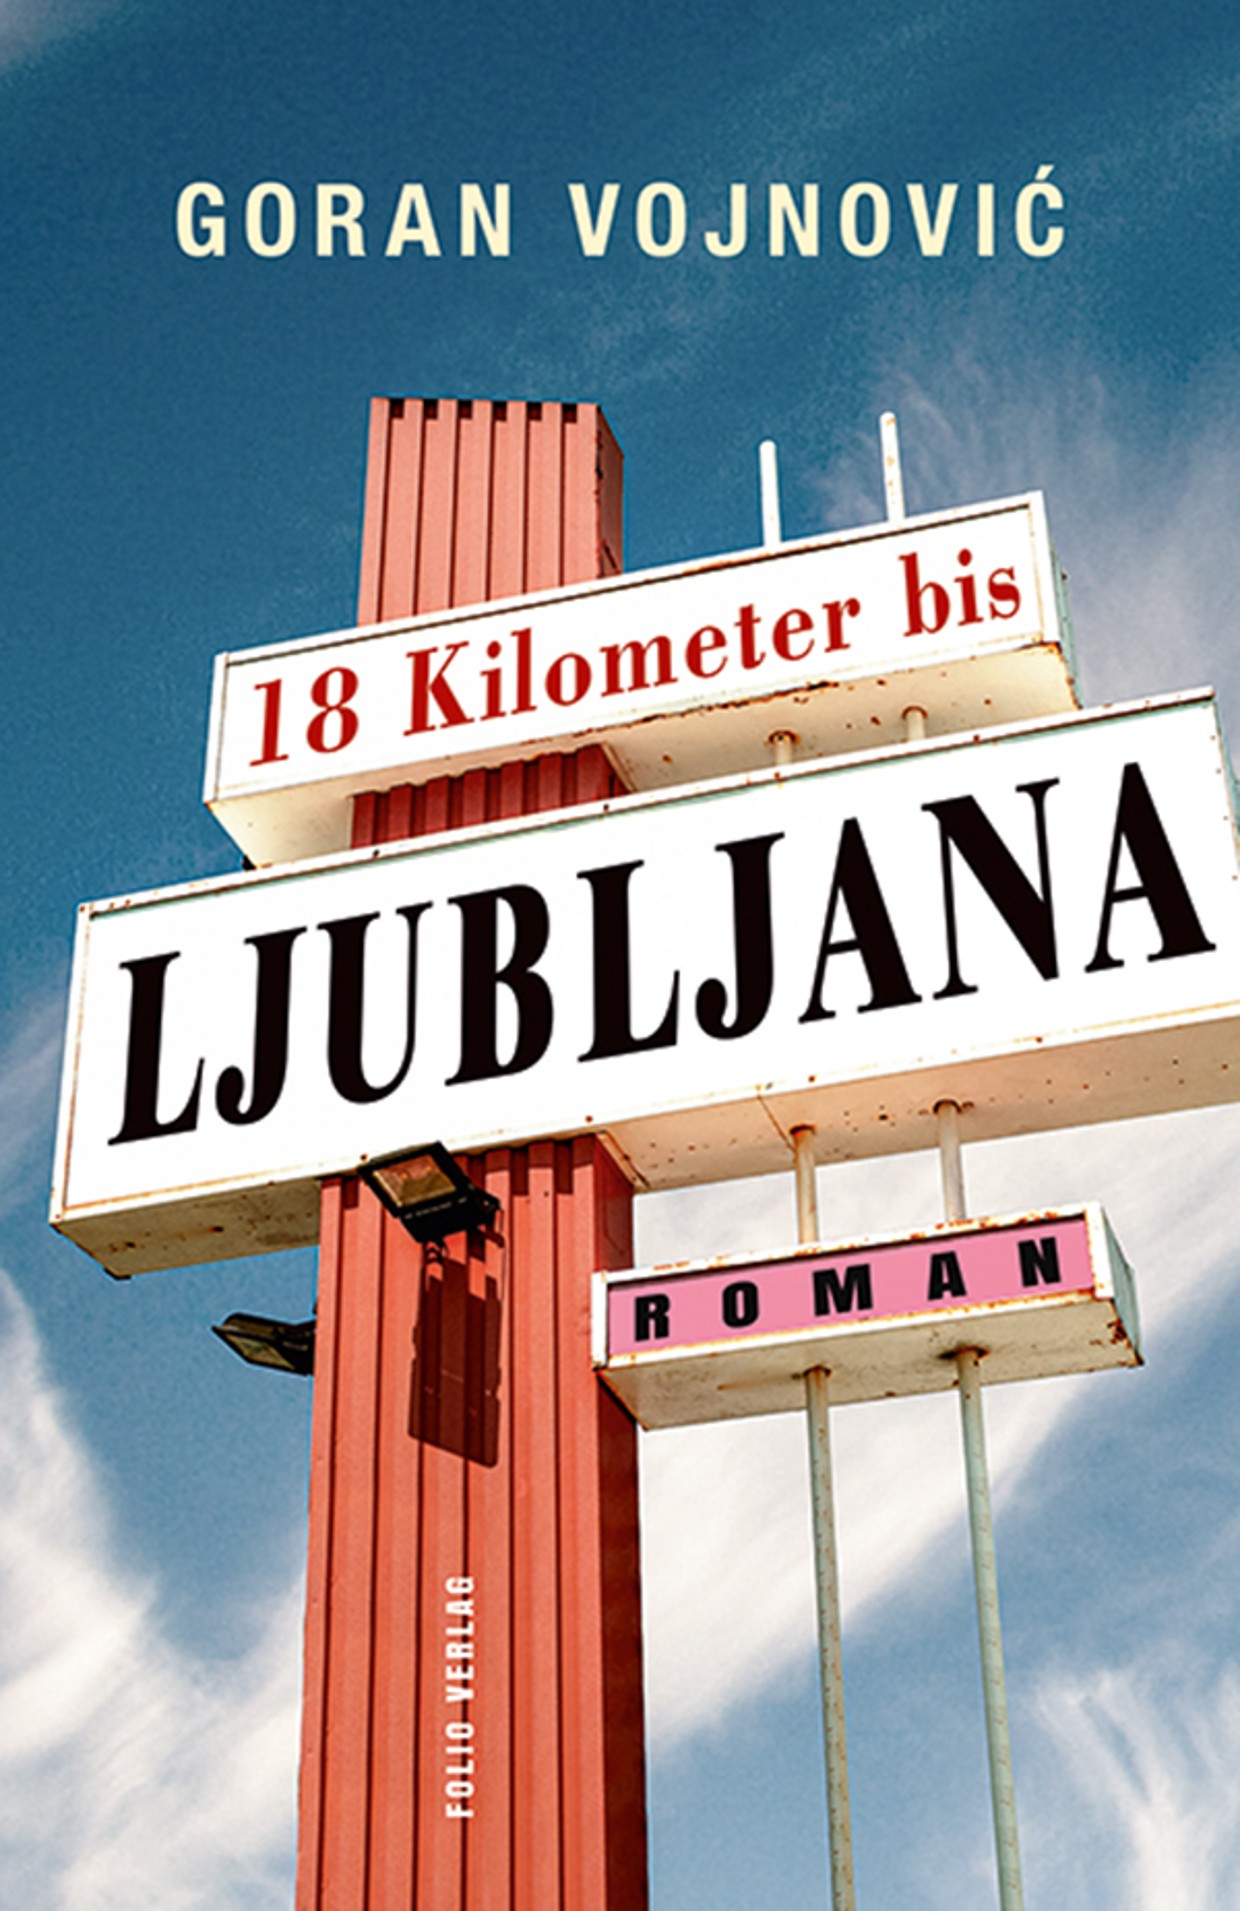 Cover des Buchtitels "18 km bis Ljubljana"